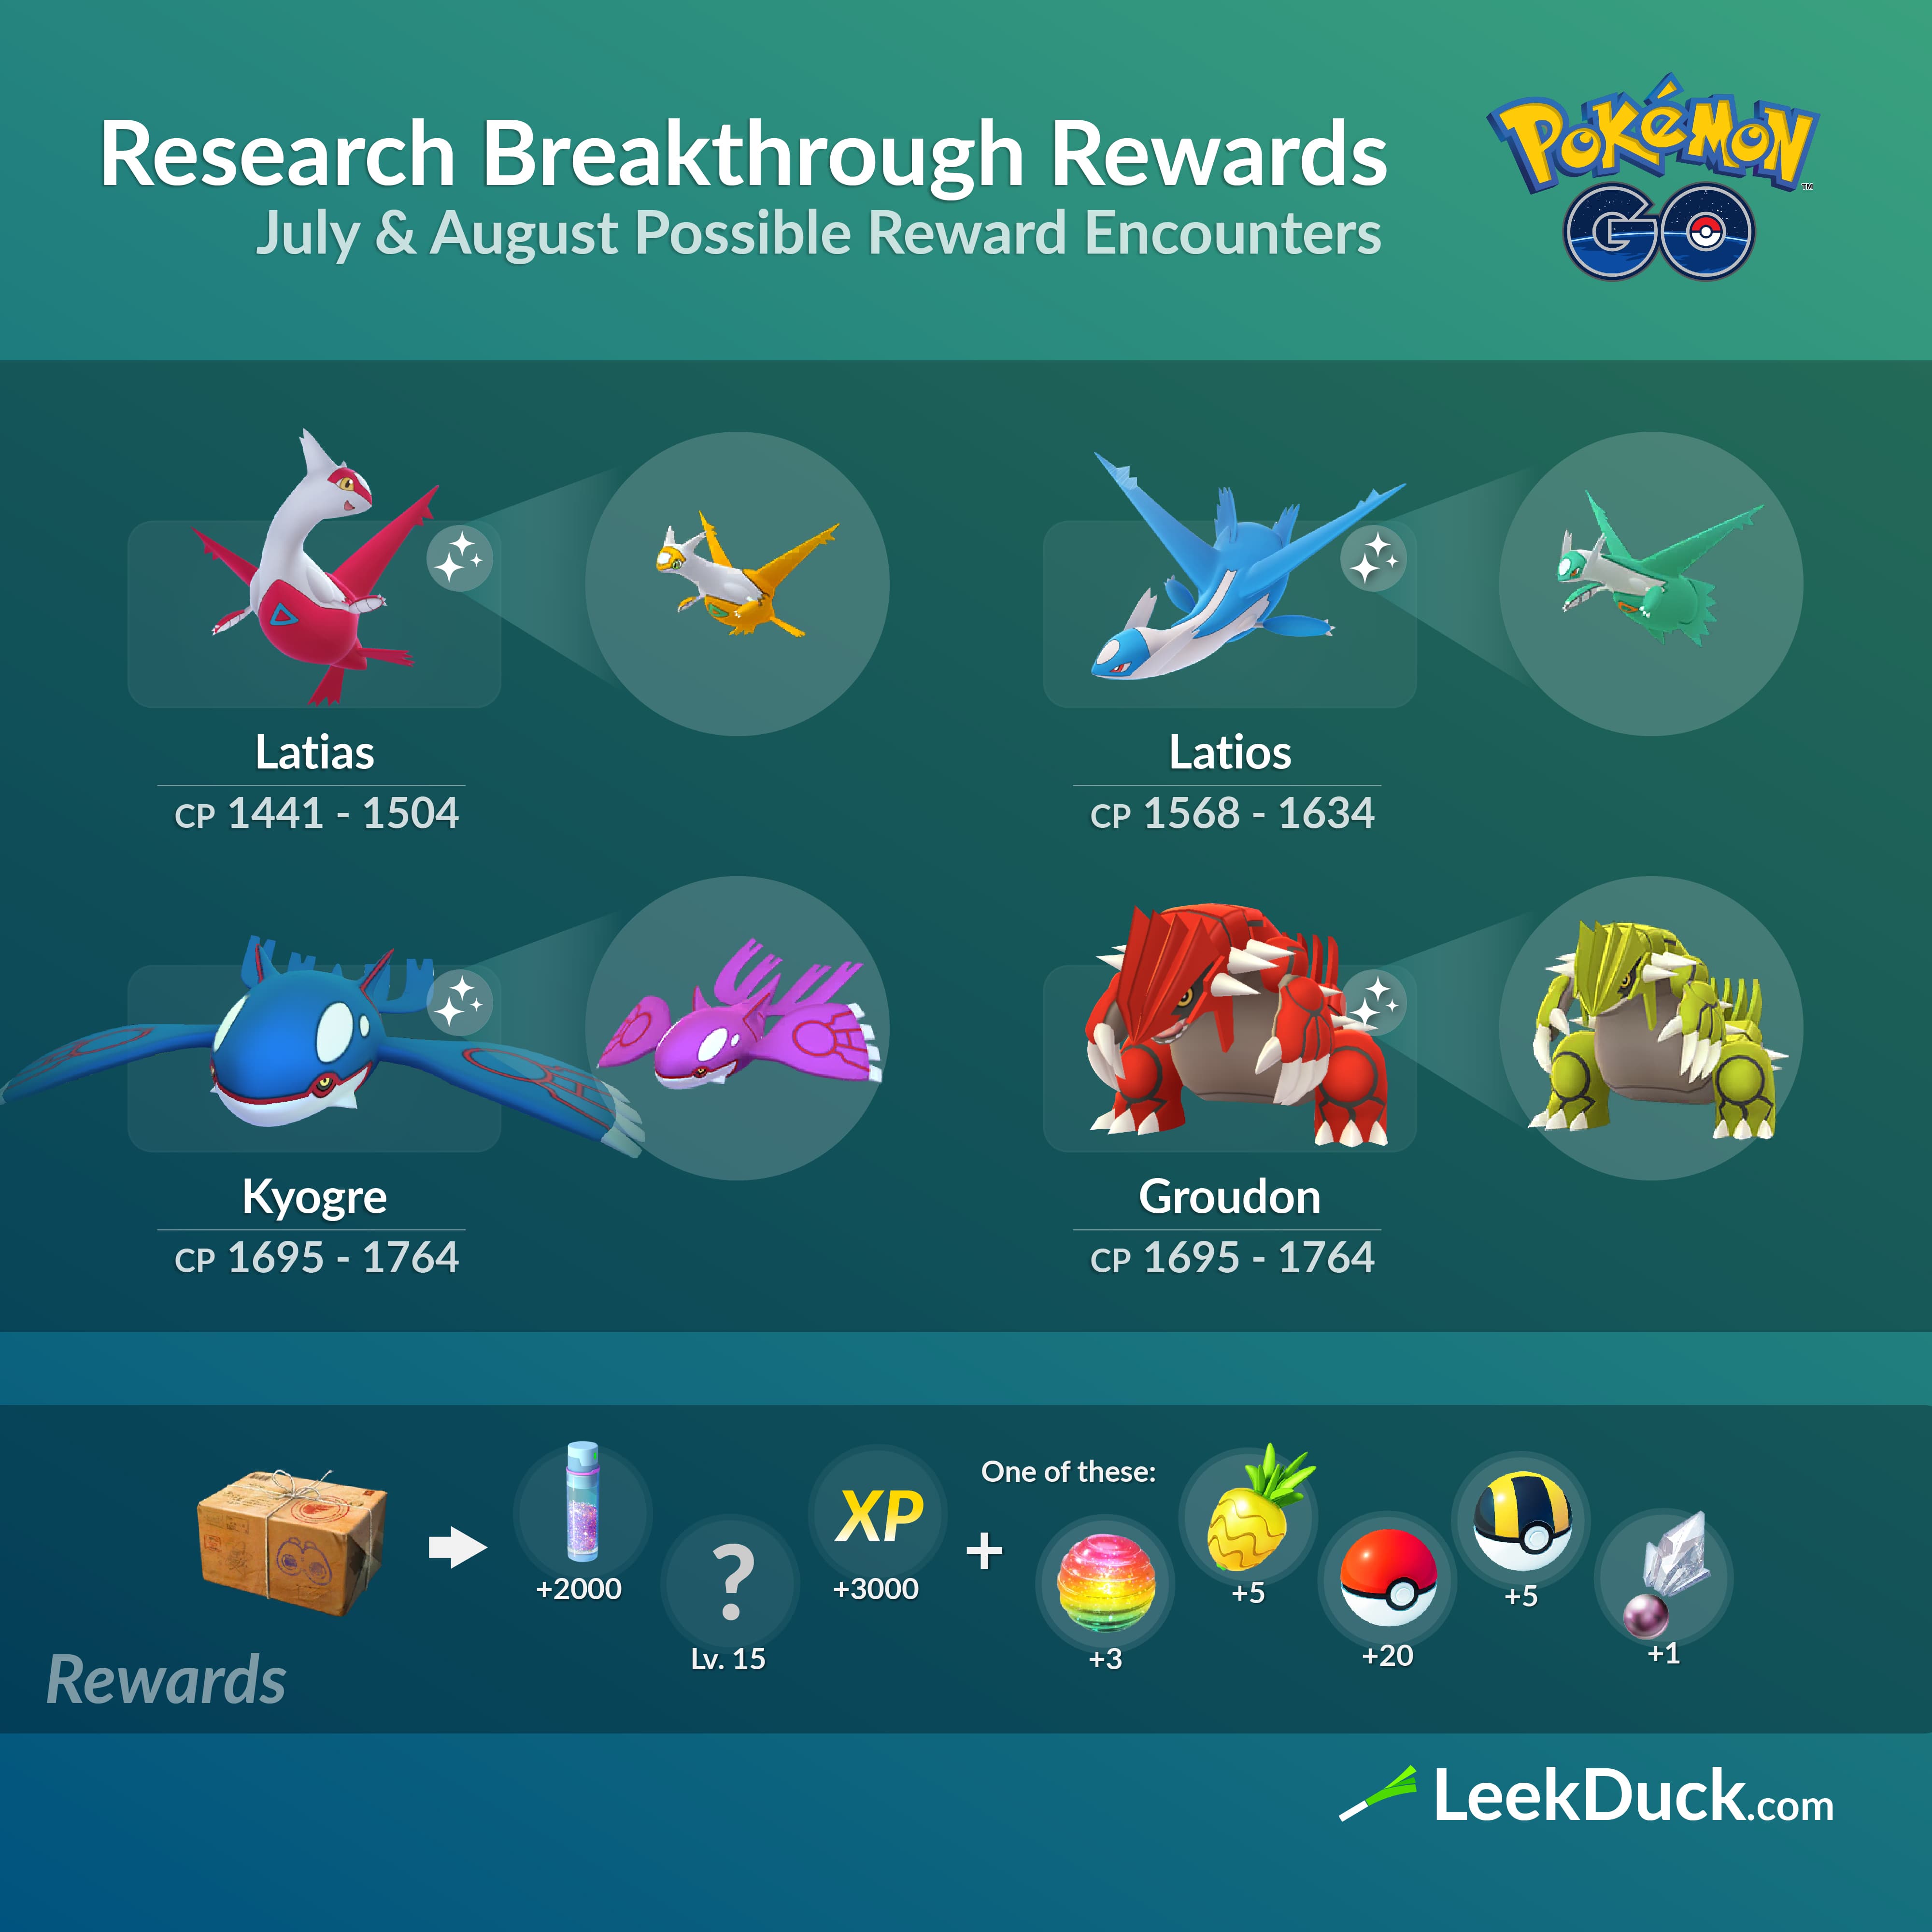 Leek Duck  Pokémon GO News and Resources